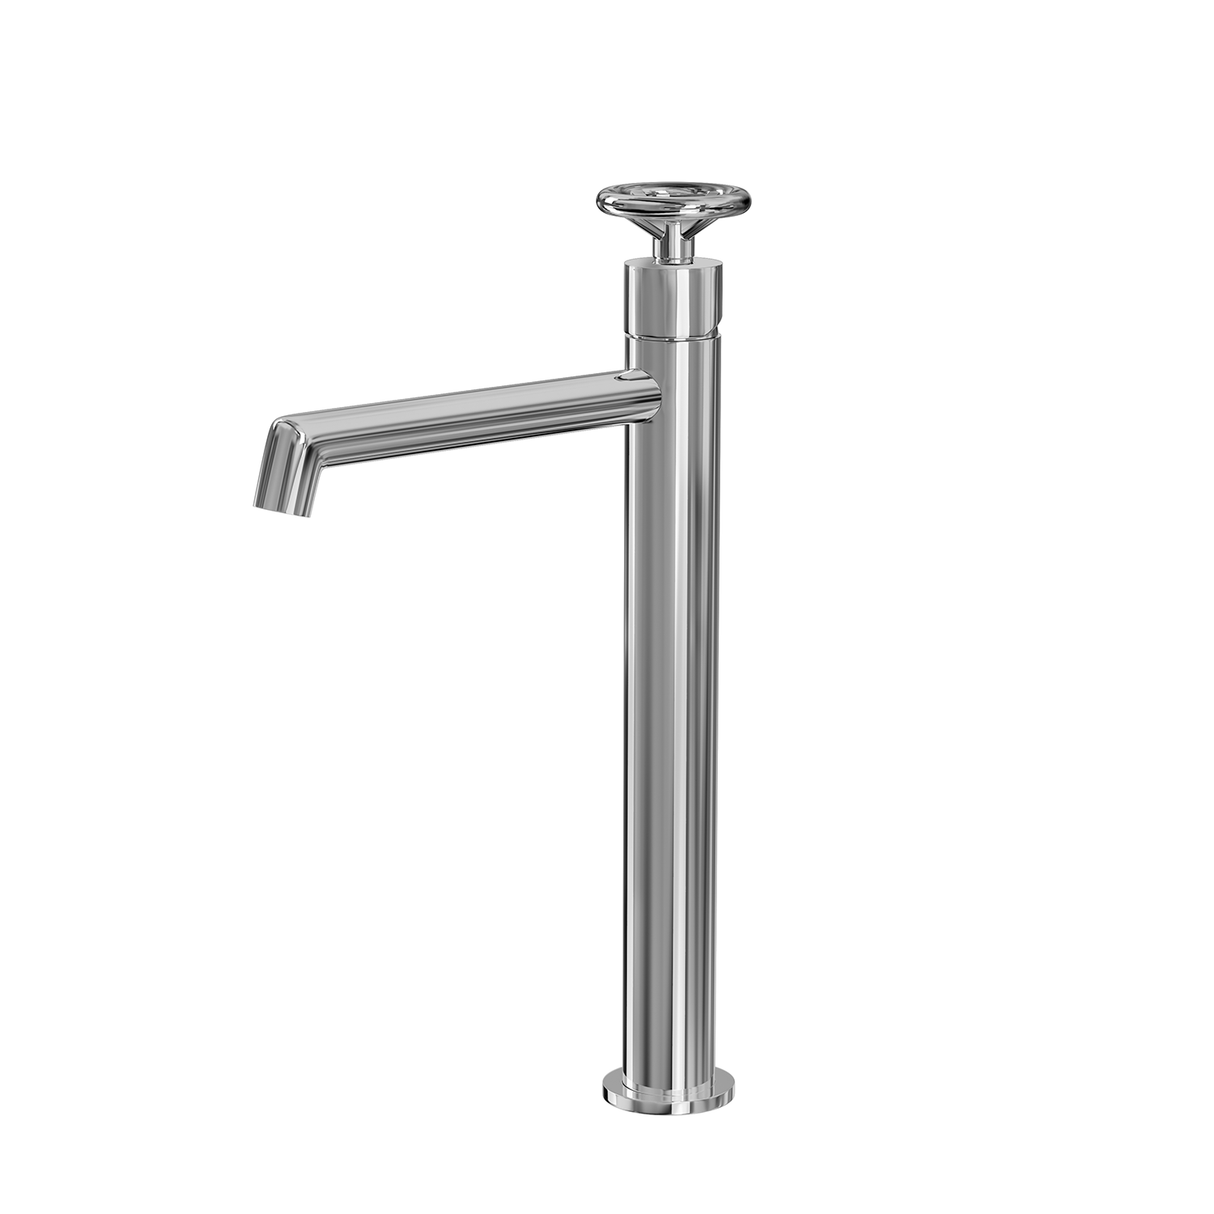 DAX Brass Single Handle Vessel Bathroom Basin Faucet, Chrome DAX-8010044-CR